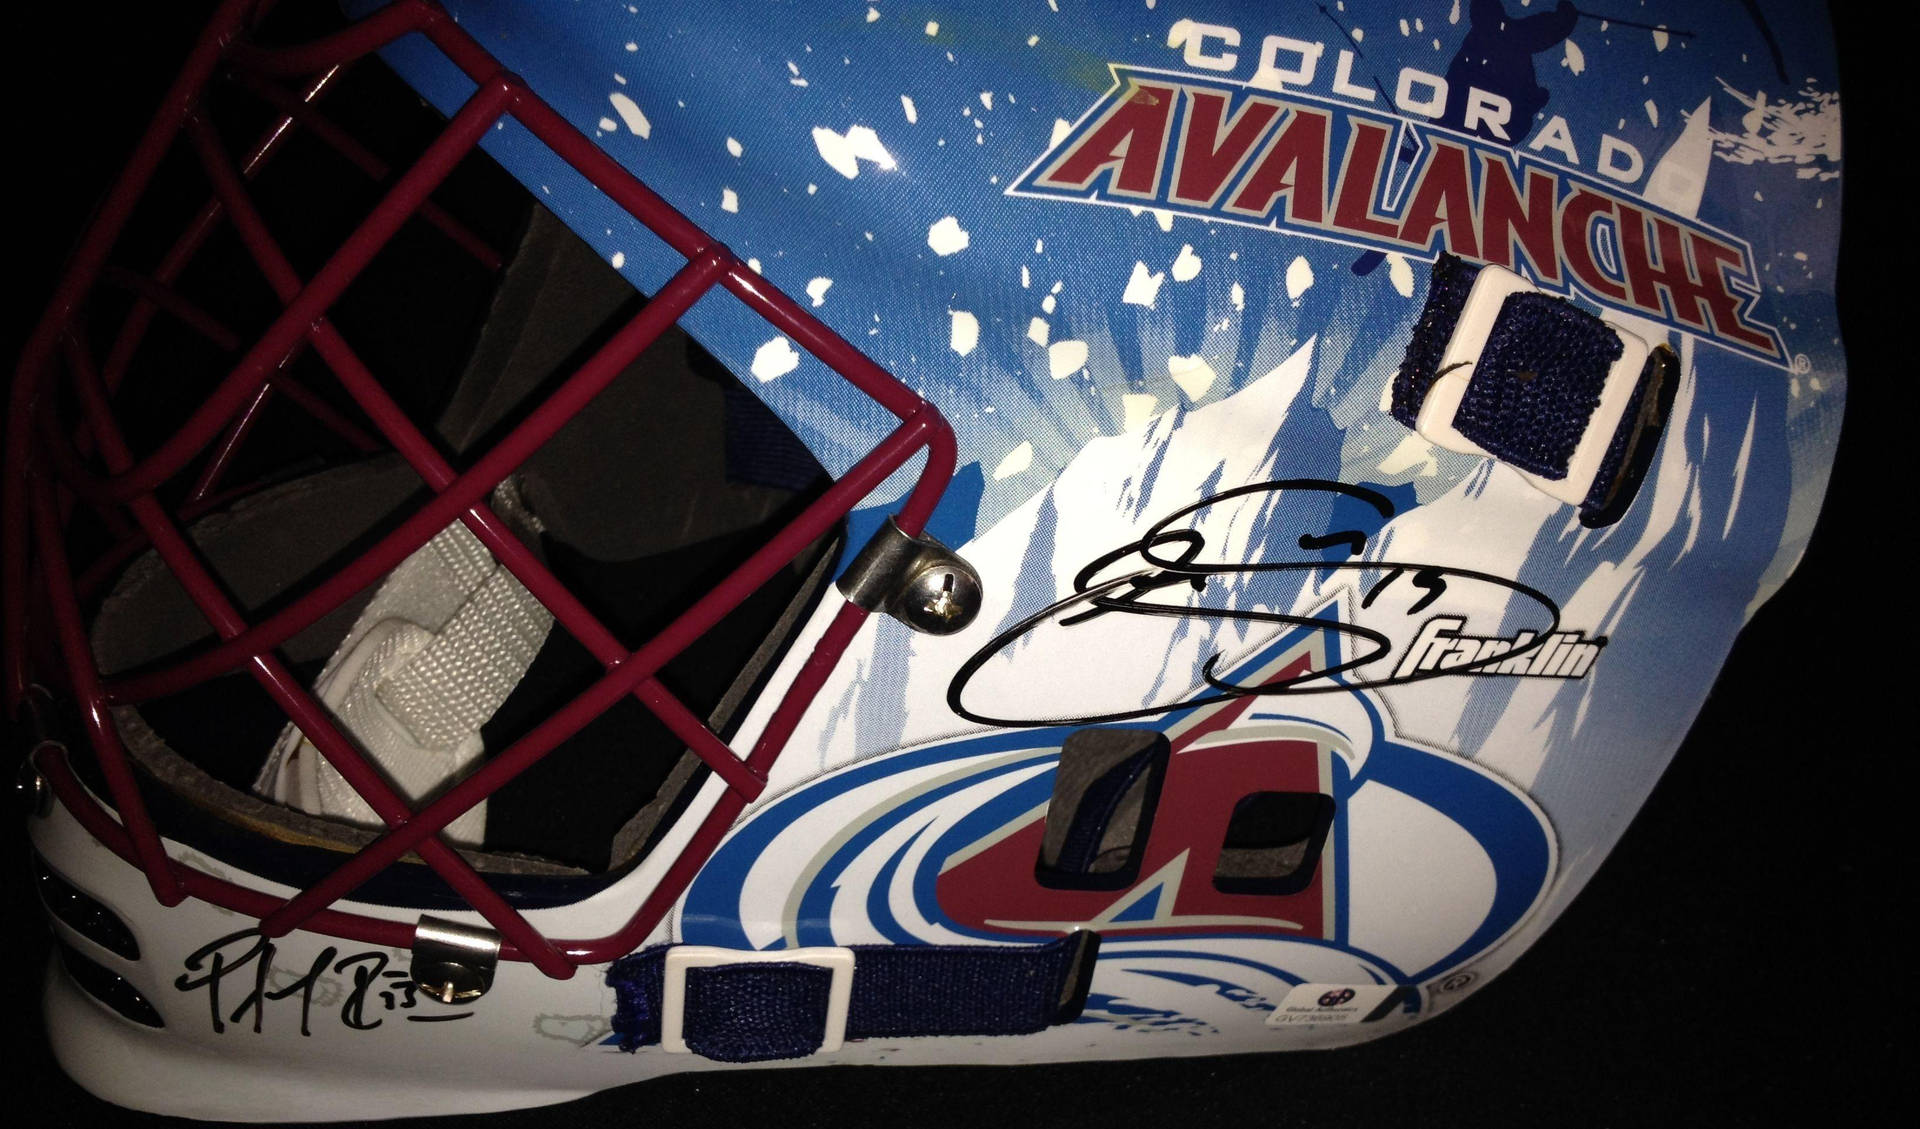 Colorado Avalanche Signed Helmet Background